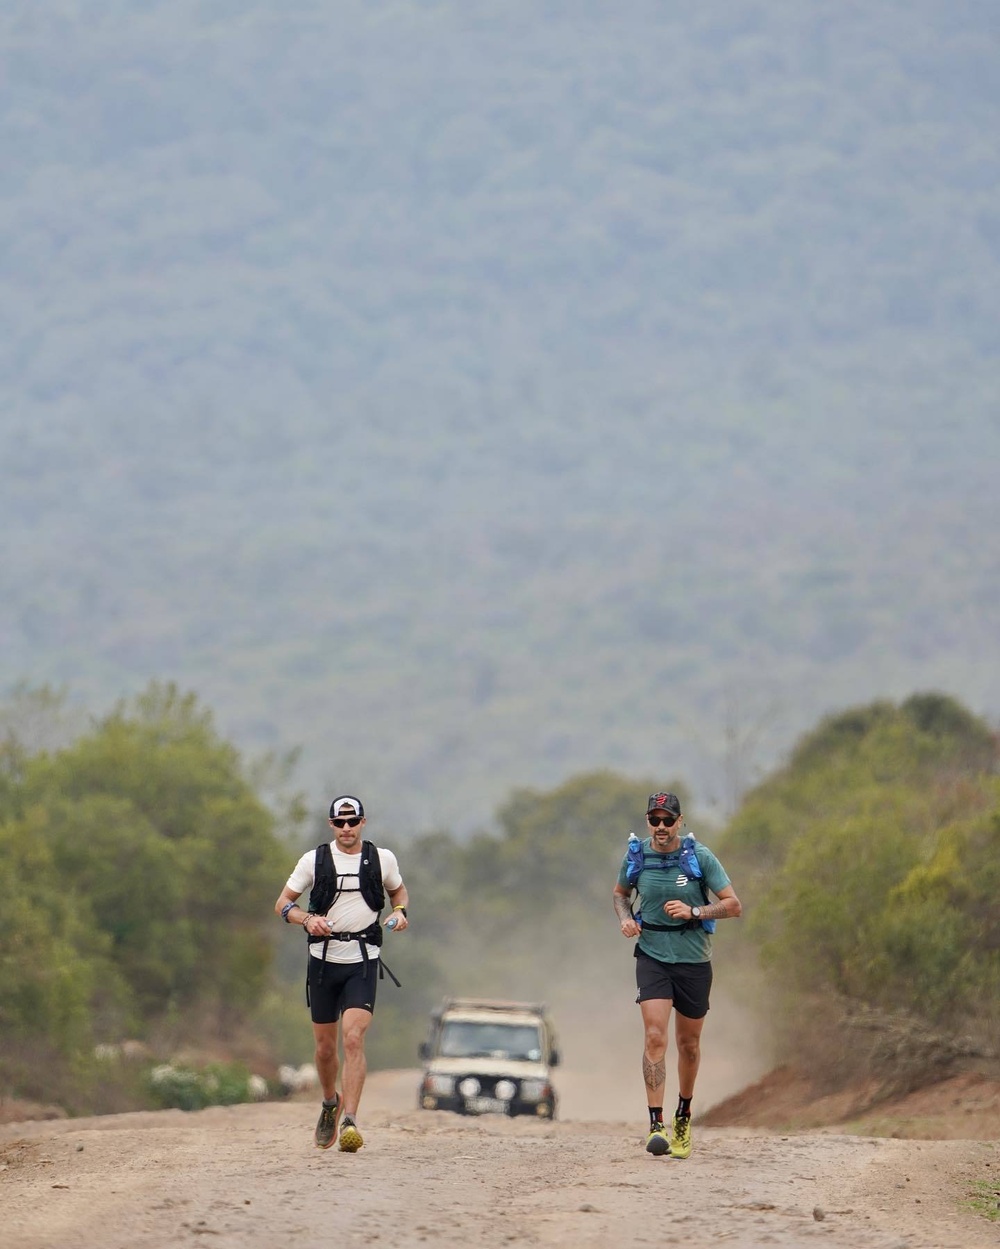 Airman Wins 140-Mile Ultramarathon in Kenya, Africa